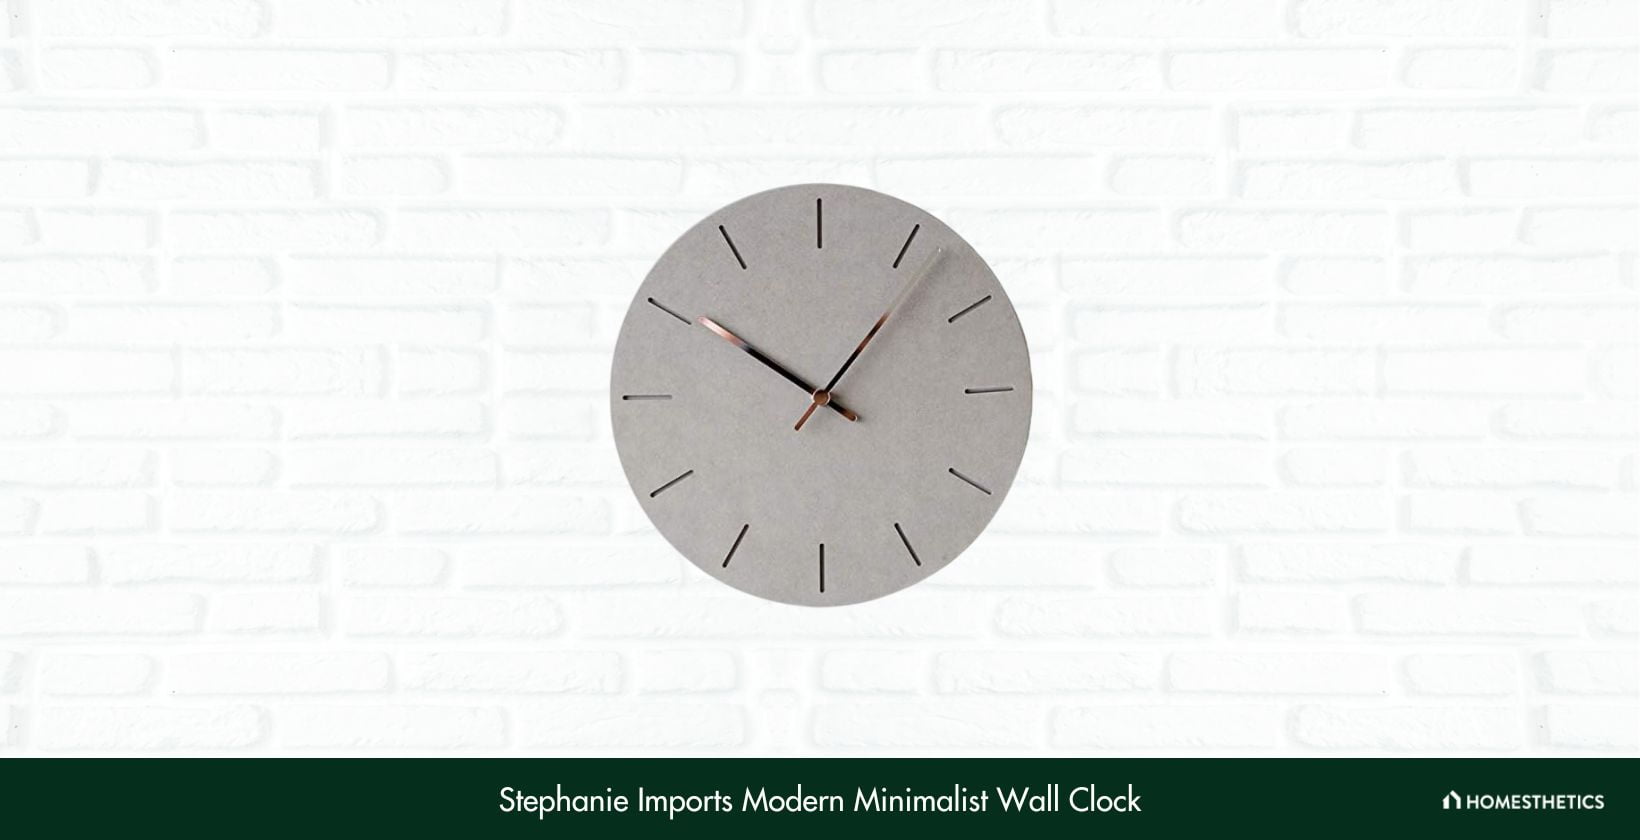 Stephanie Imports Modern Minimalist Wall Clock